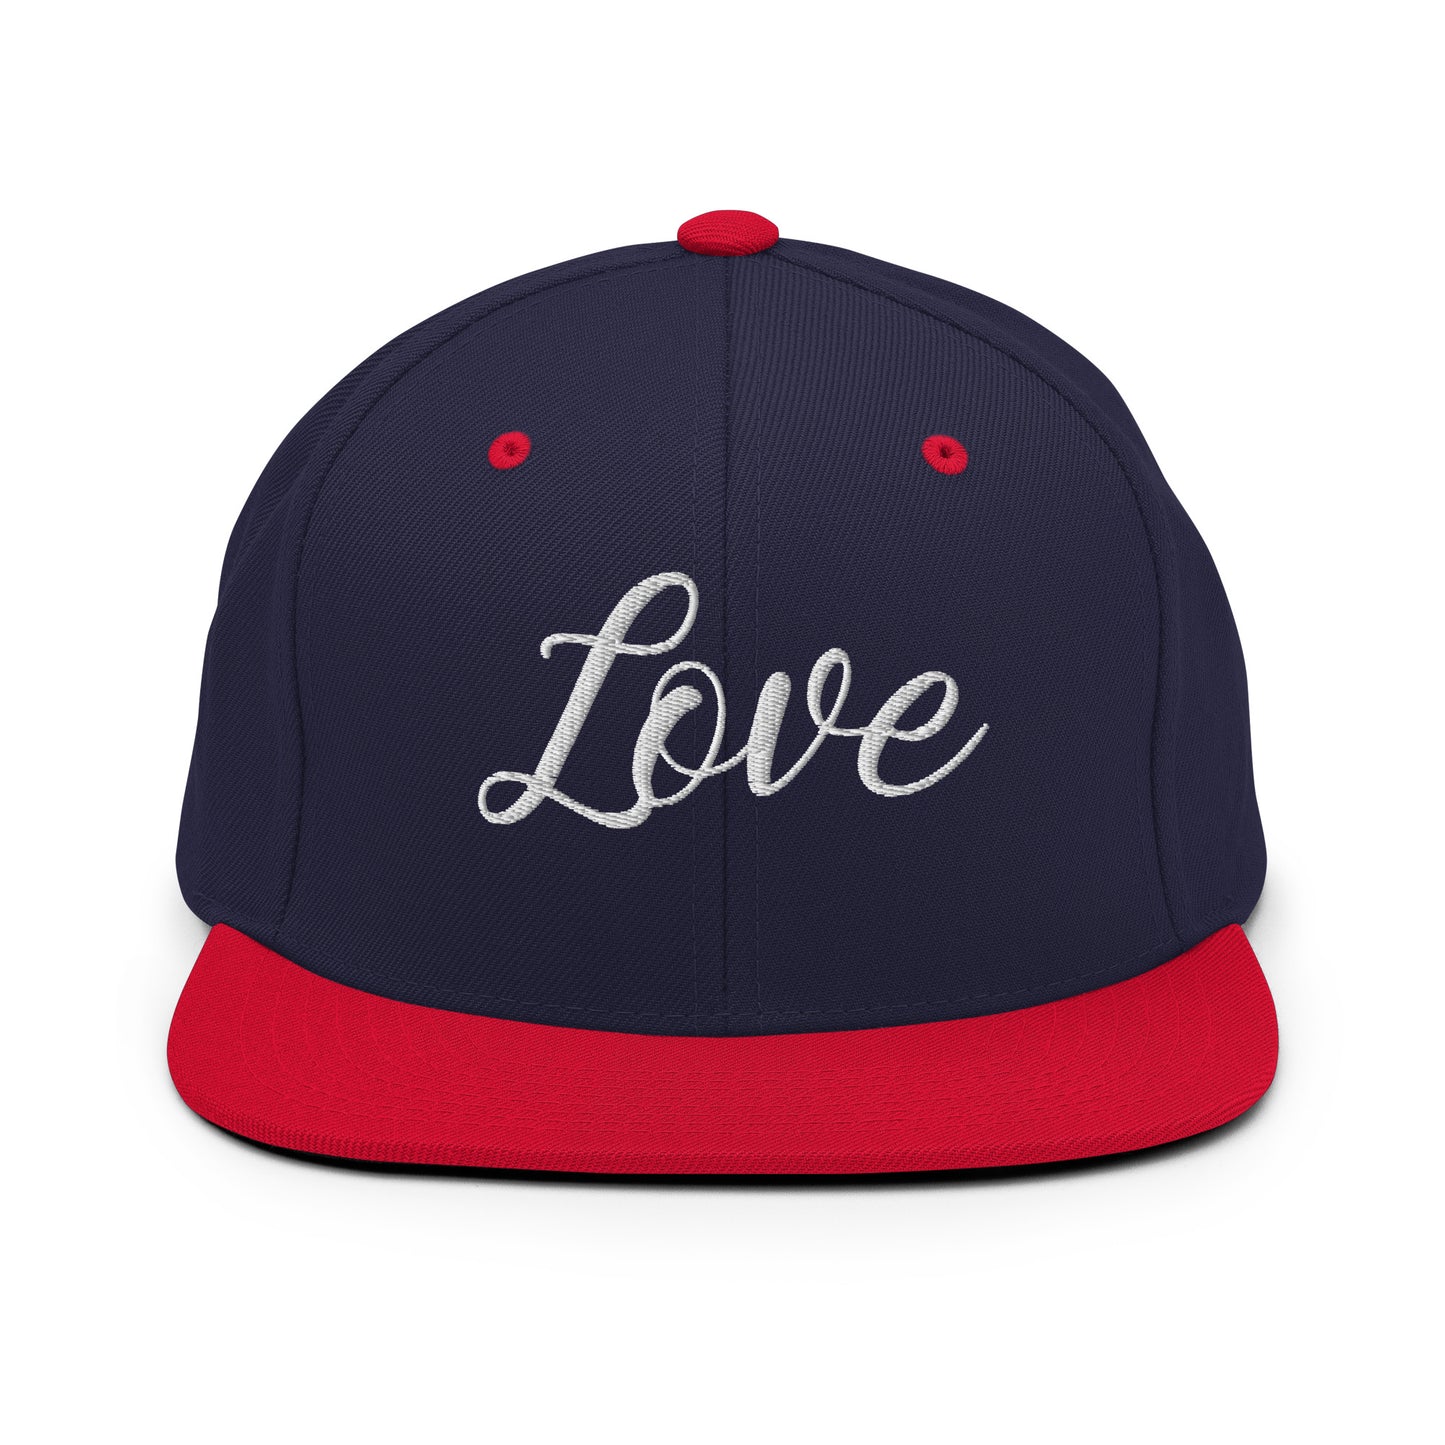 "Love" Snapback Hat